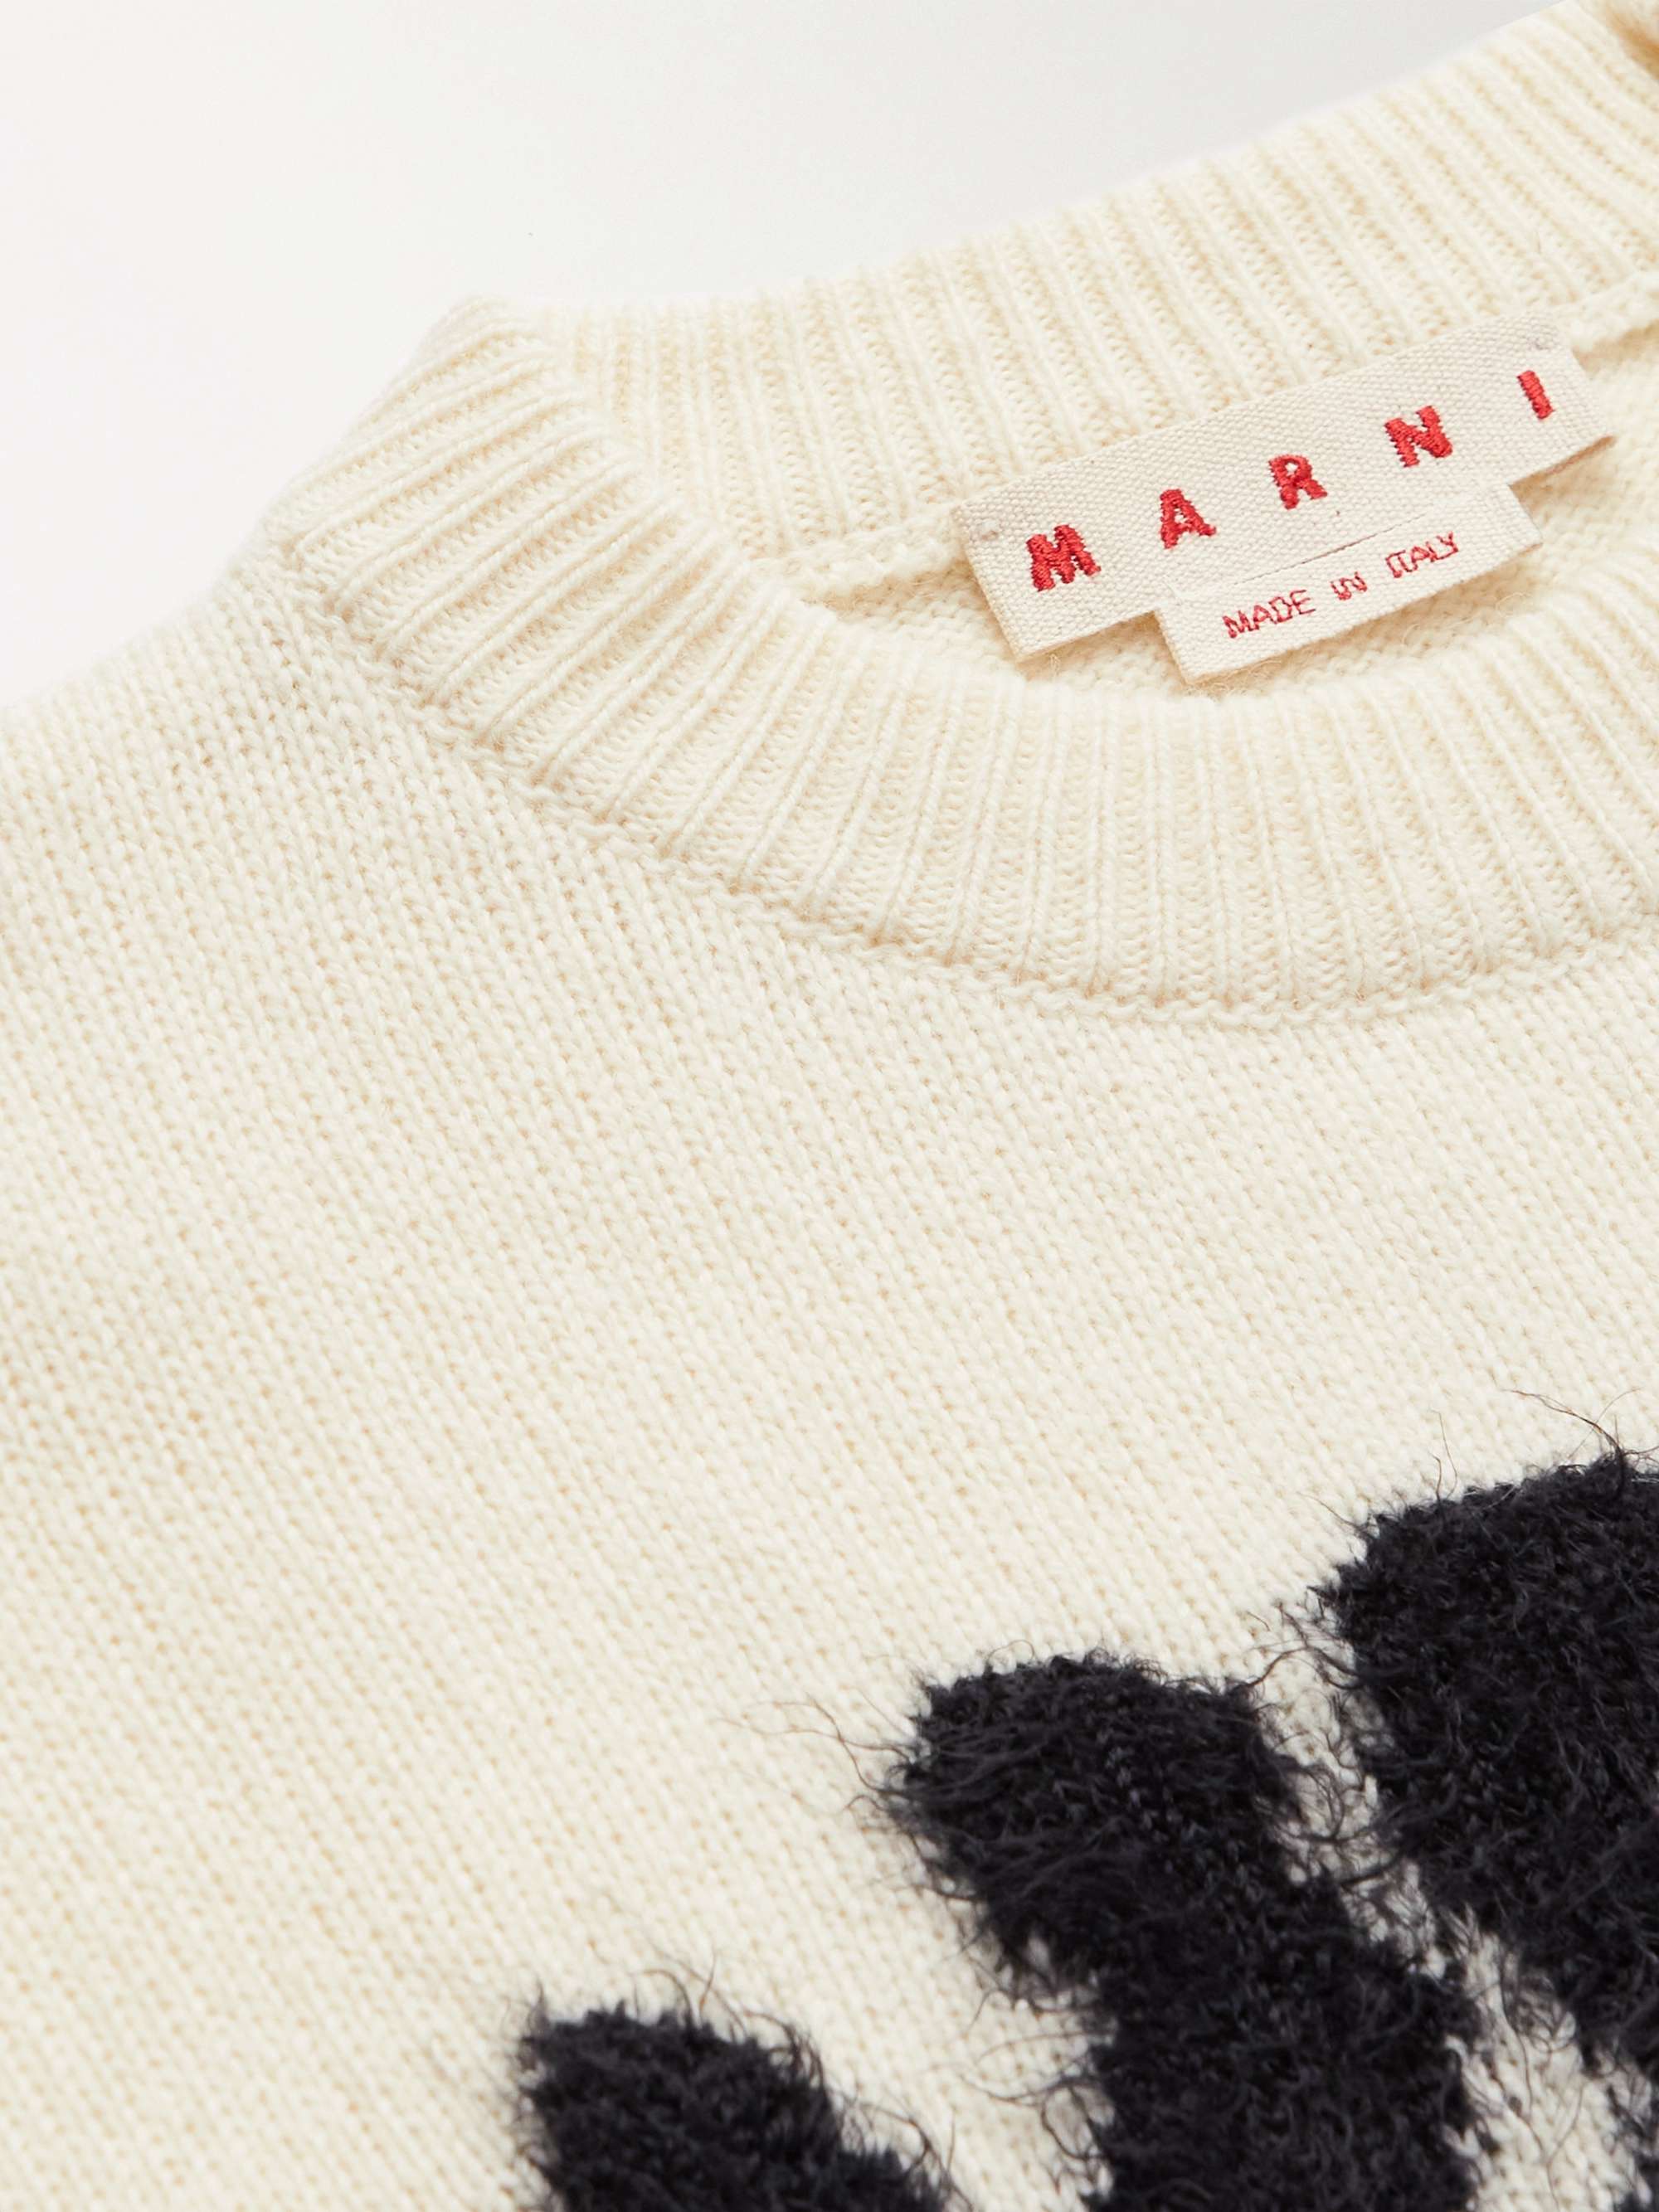 MARNI Logo-Intarsia Virgin Wool-Blend Sweater